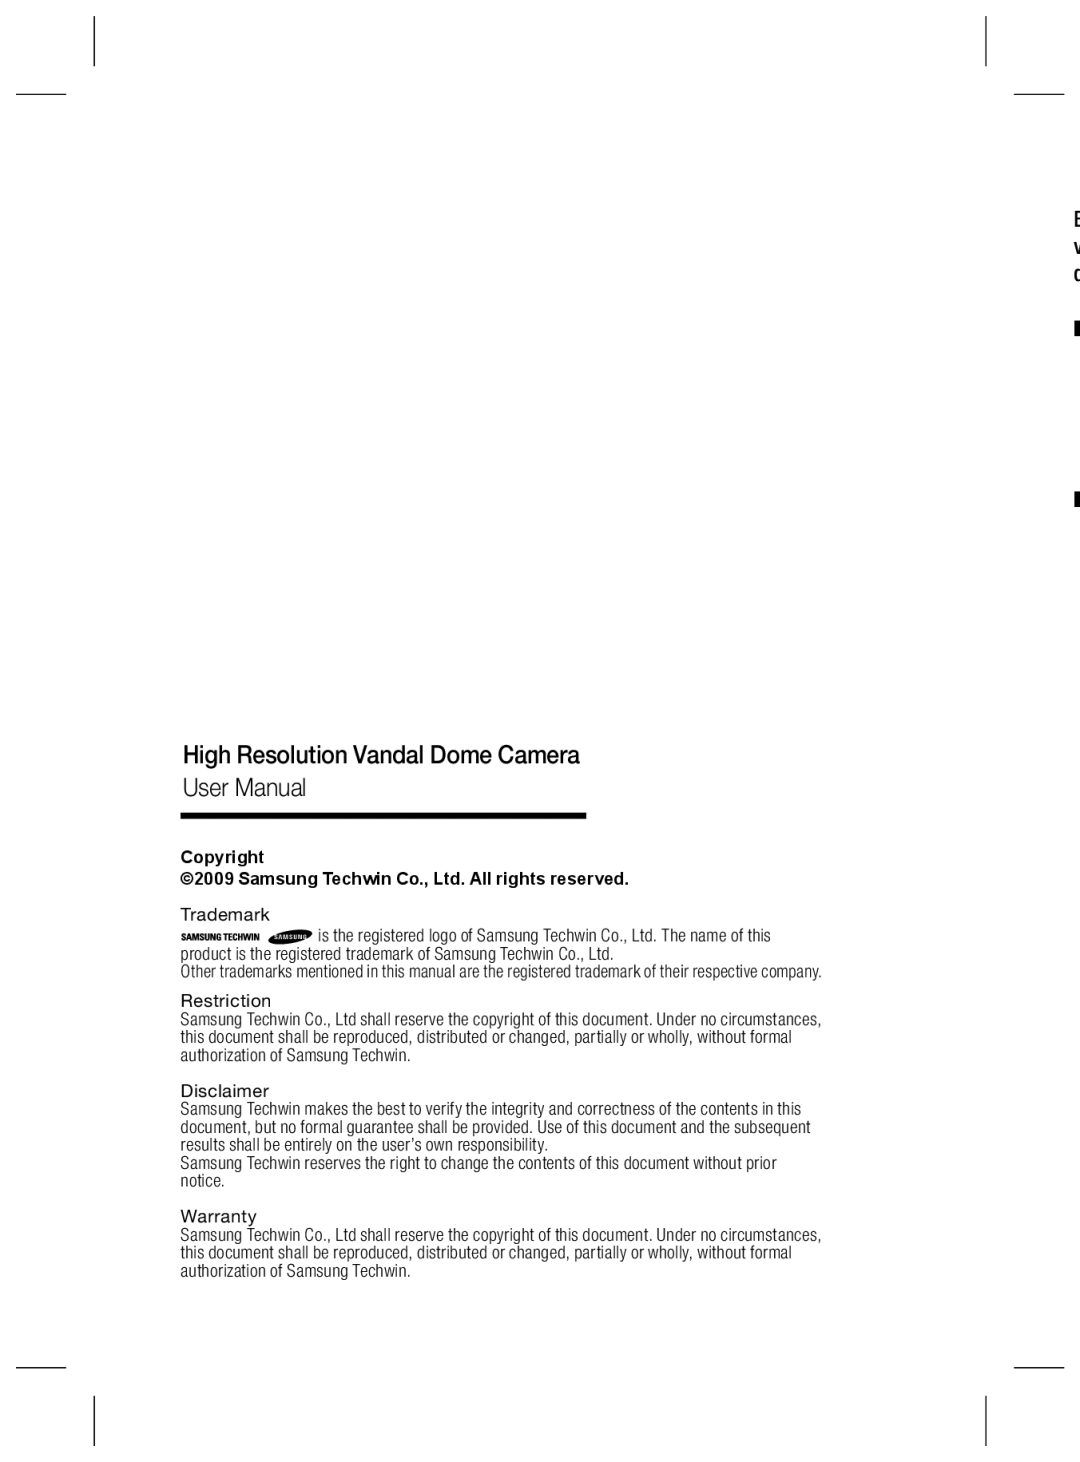 Samsung SCV-2080P, SCV-2080X, SCV-2080N user manual High Resolution Vandal Dome Camera User Manual, Copyright 